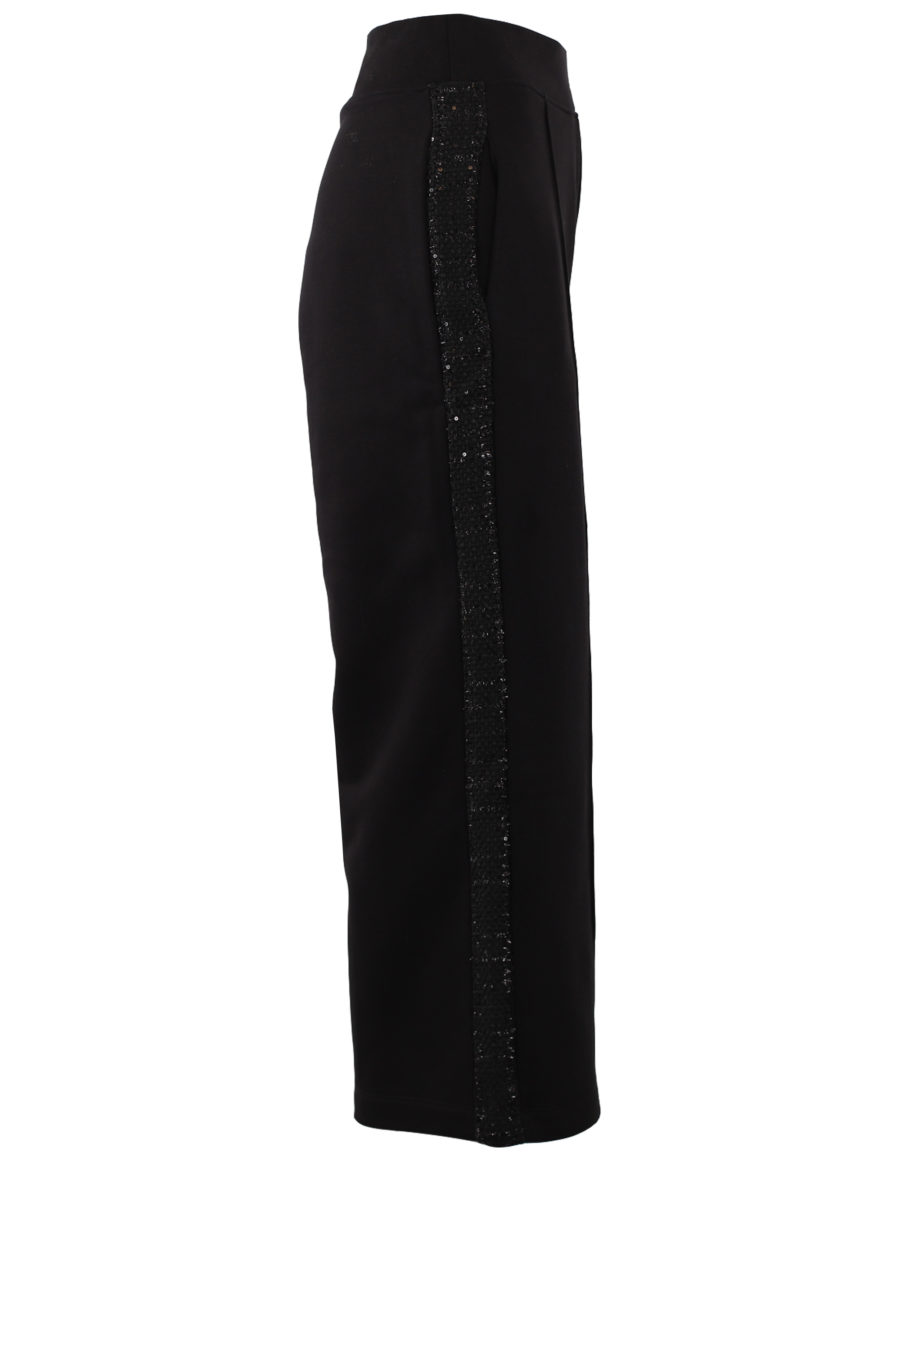 Pantalon noir avec ruban bouclé - IMG 0374